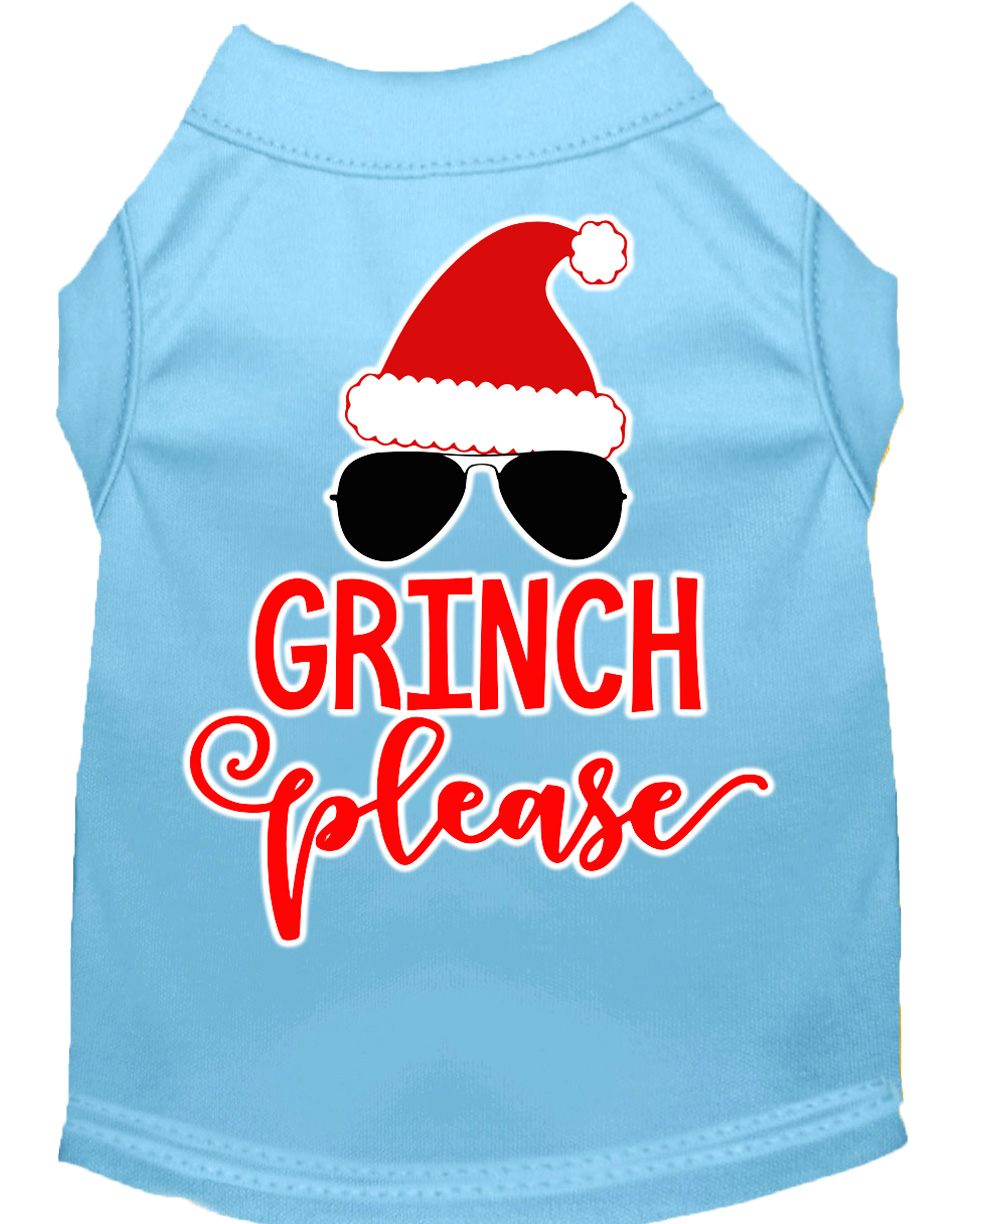 Grinch Please Screen Print Dog Shirt Baby Blue XS